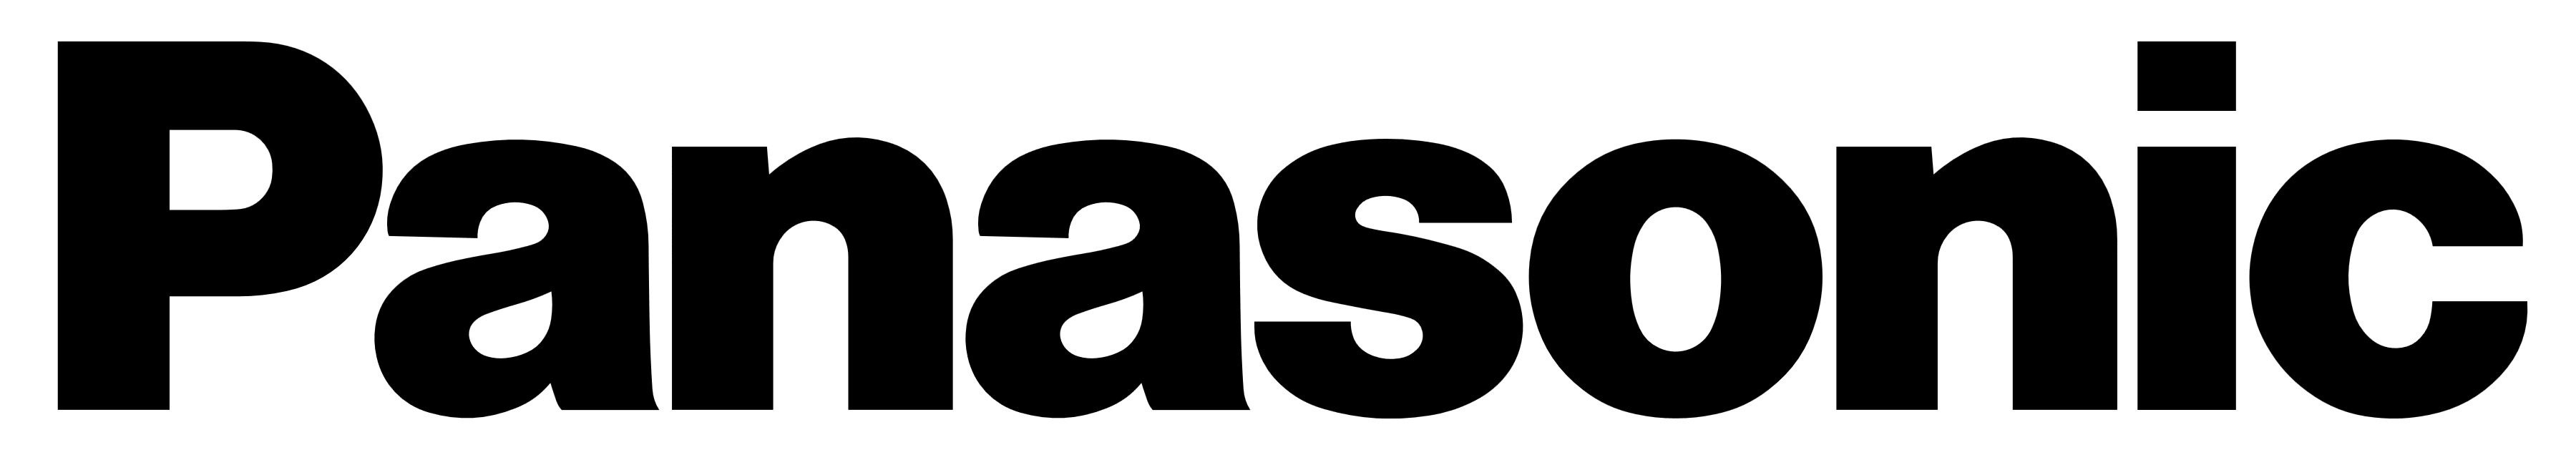 Panasonic logo, logotype